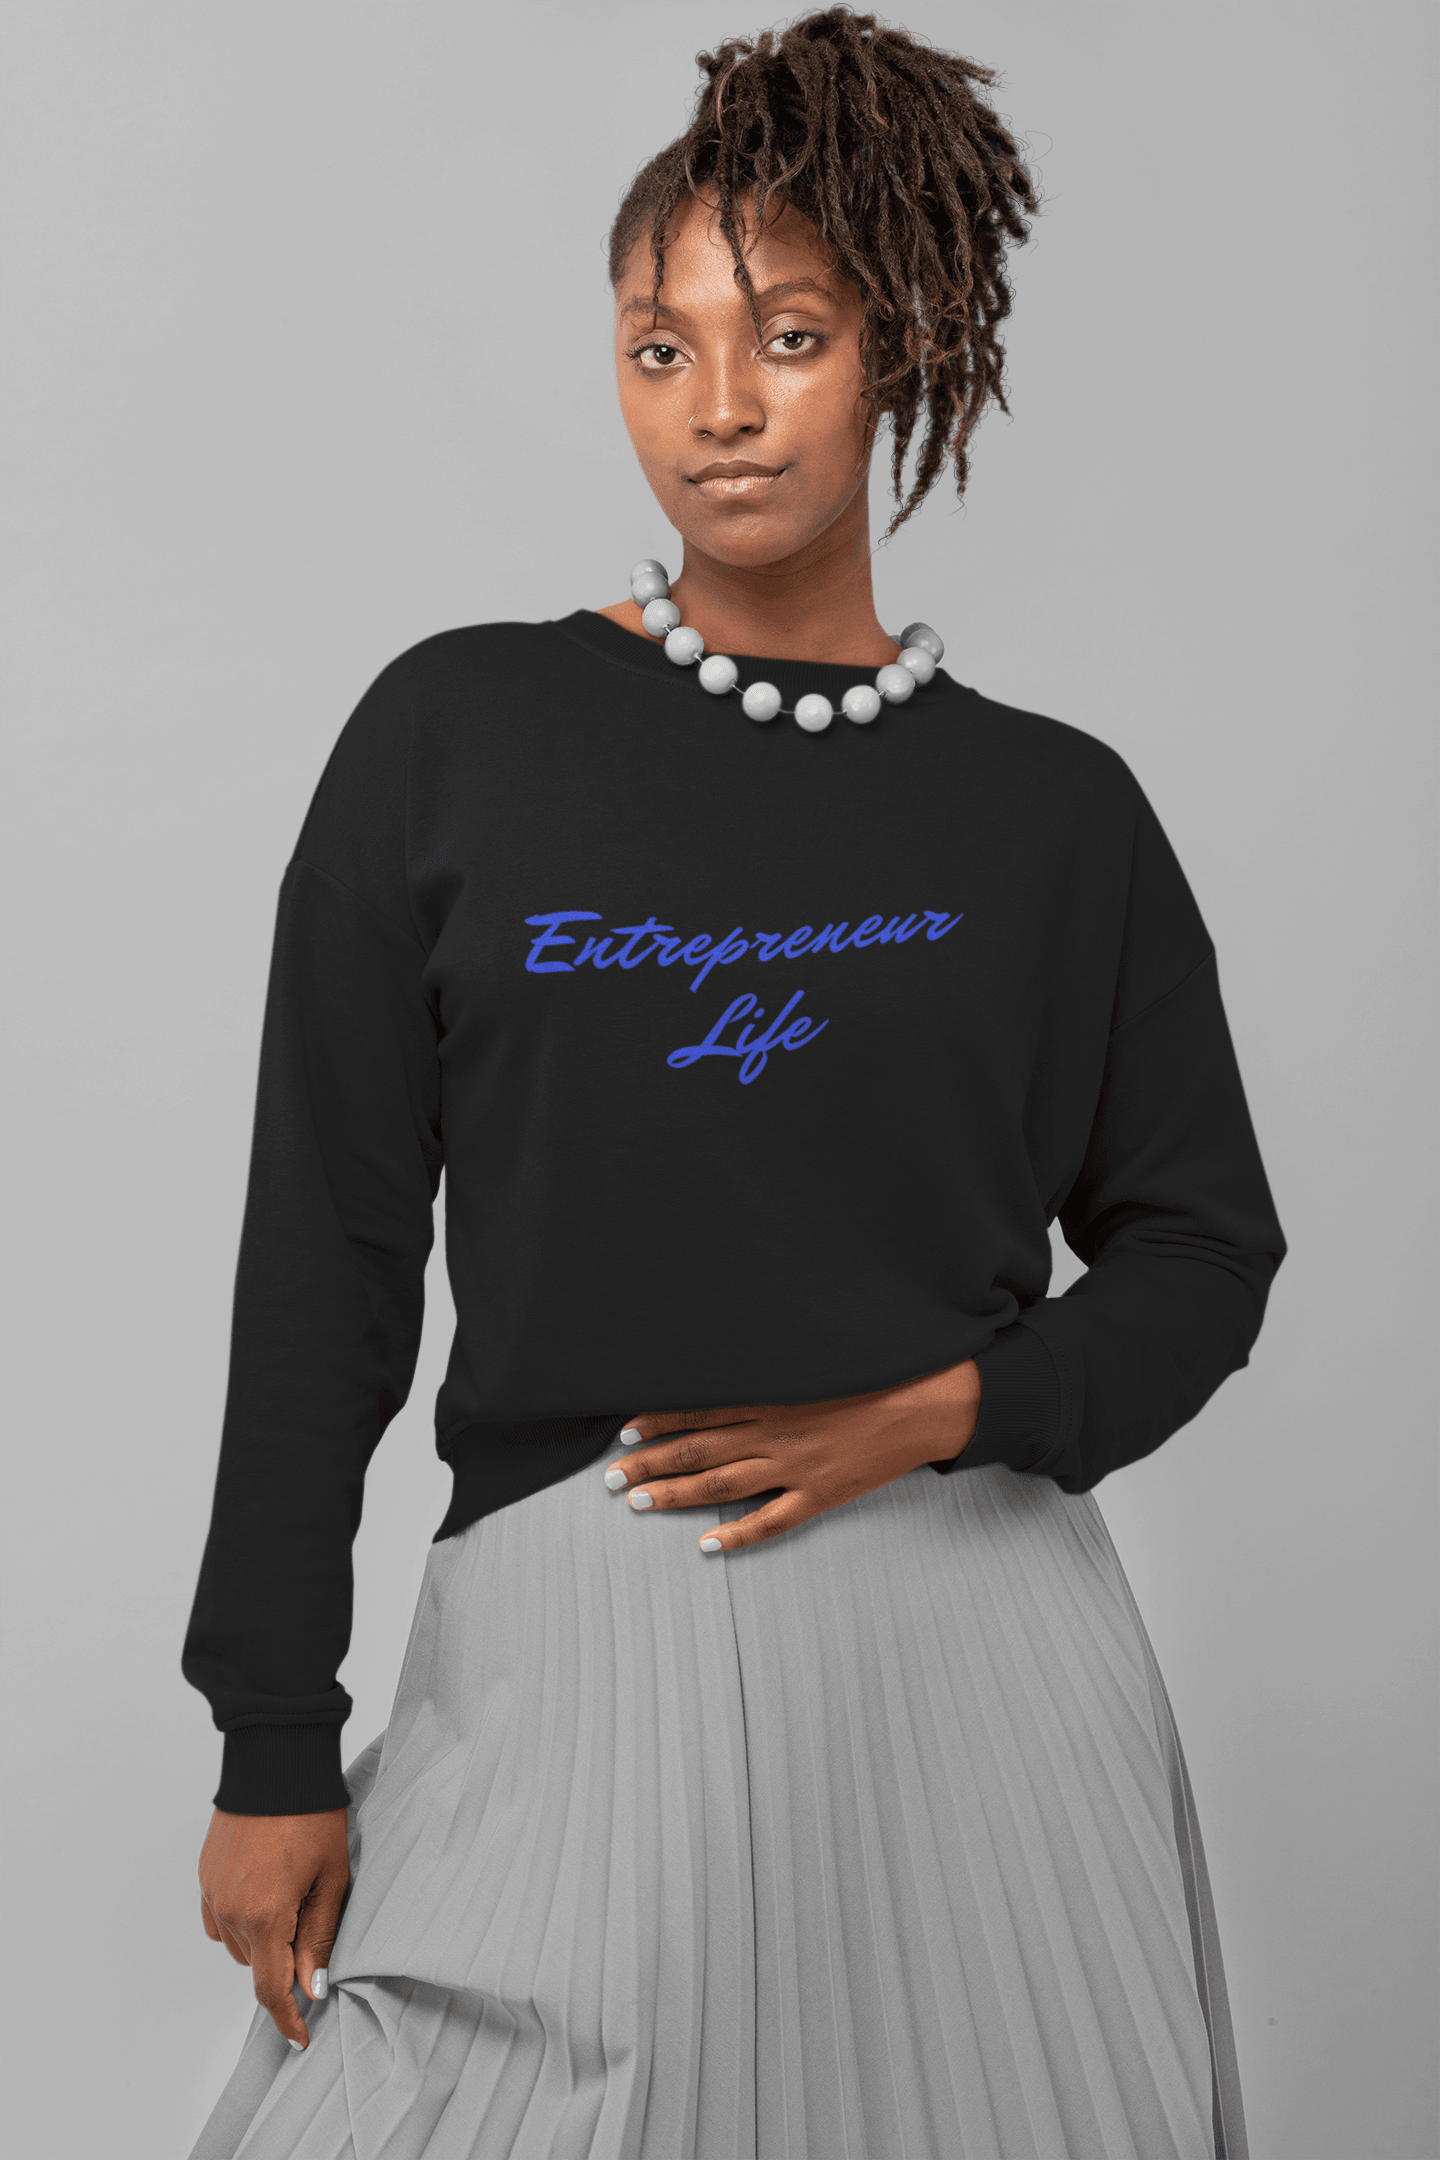 Entrepreneur Life Sweatshirt - Women Empowerment T-Shirts & Apparel | CP Designs Unlimited